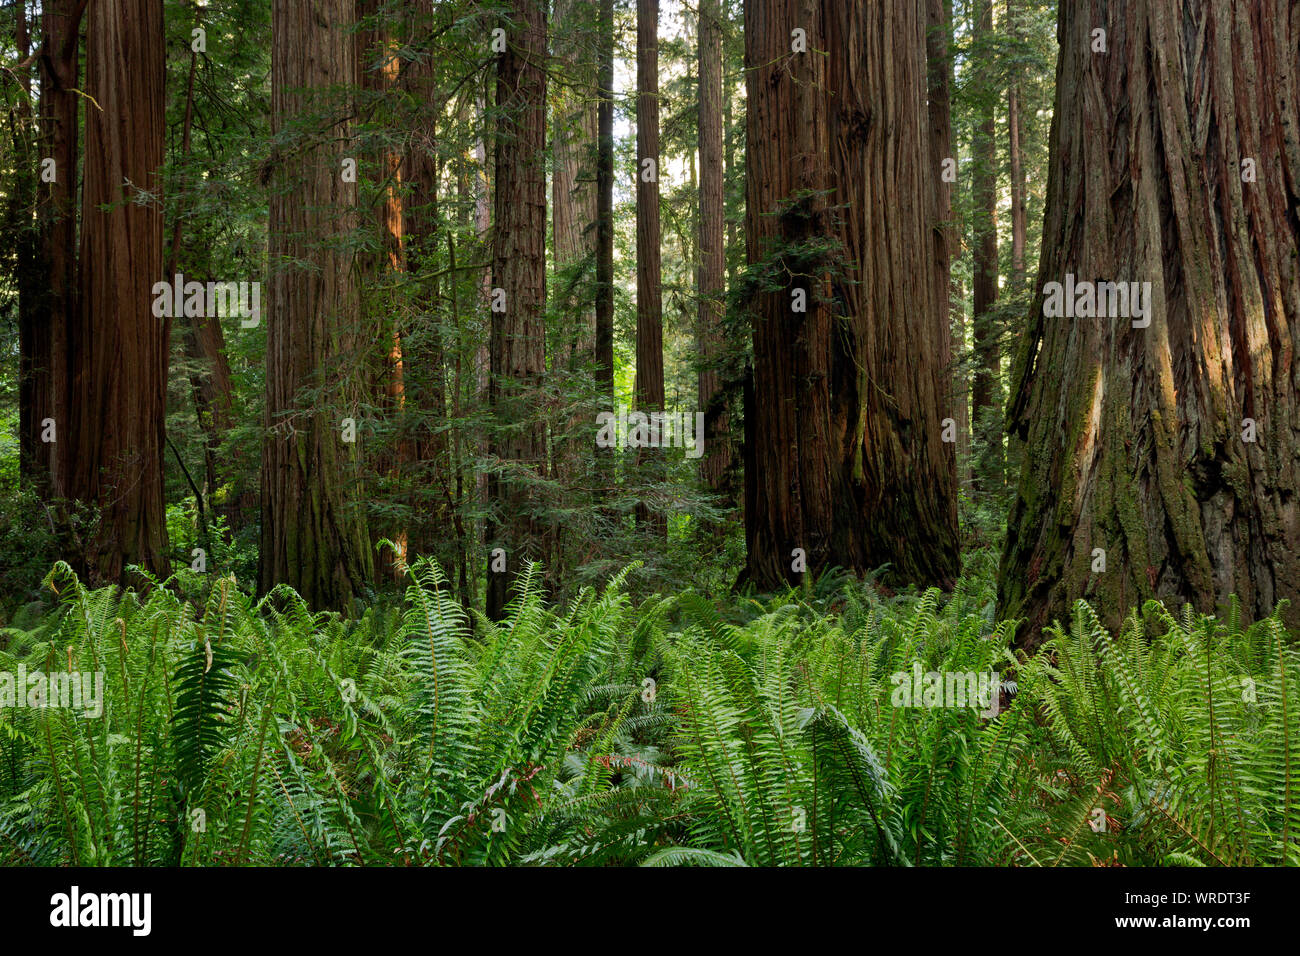 CA03510-00...CALIFORNIA - Spada di felci giganti e alberi di sequoia in Stout Grove area di Jedediah Smith Redwoods State Park. Foto Stock